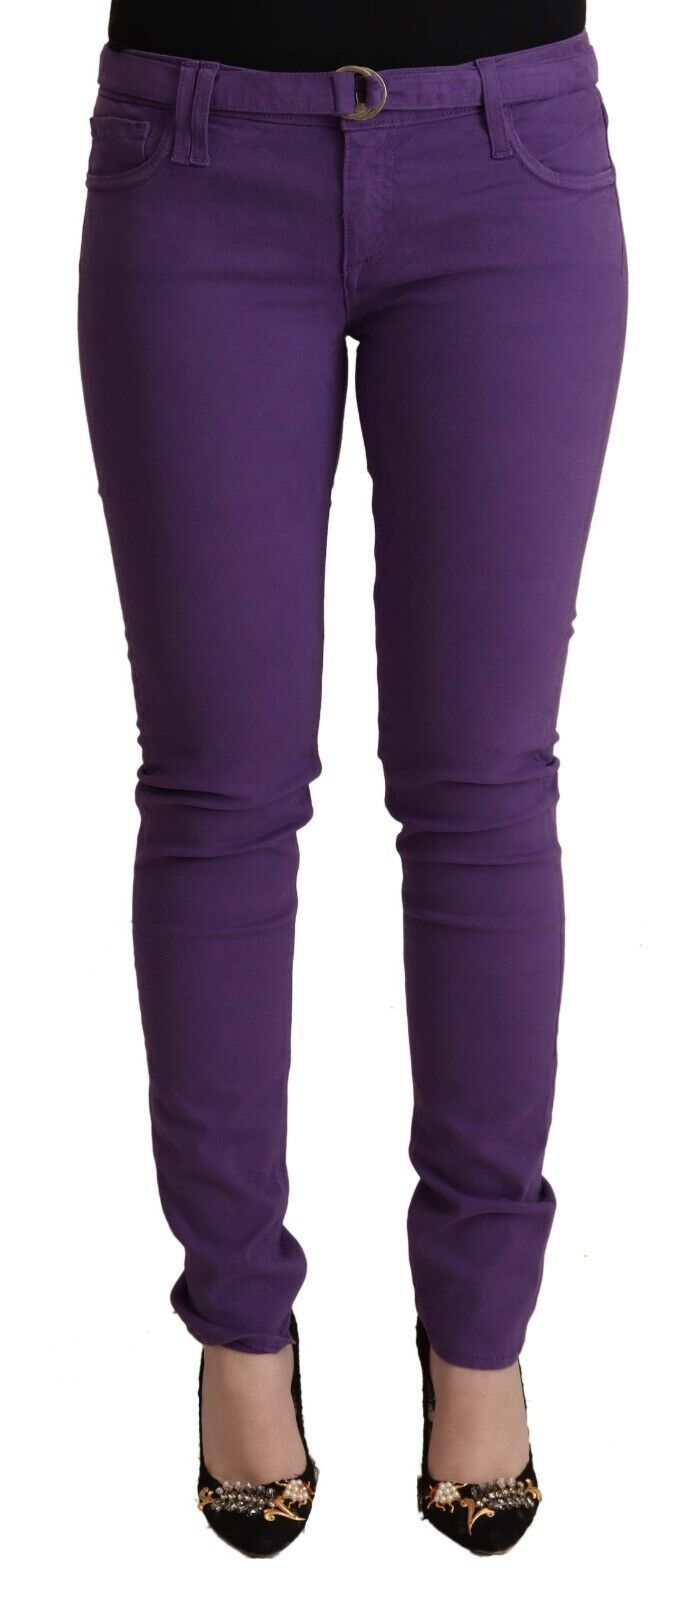 CYCLE Chic Purple Low Waist Skinny Women's Jeans